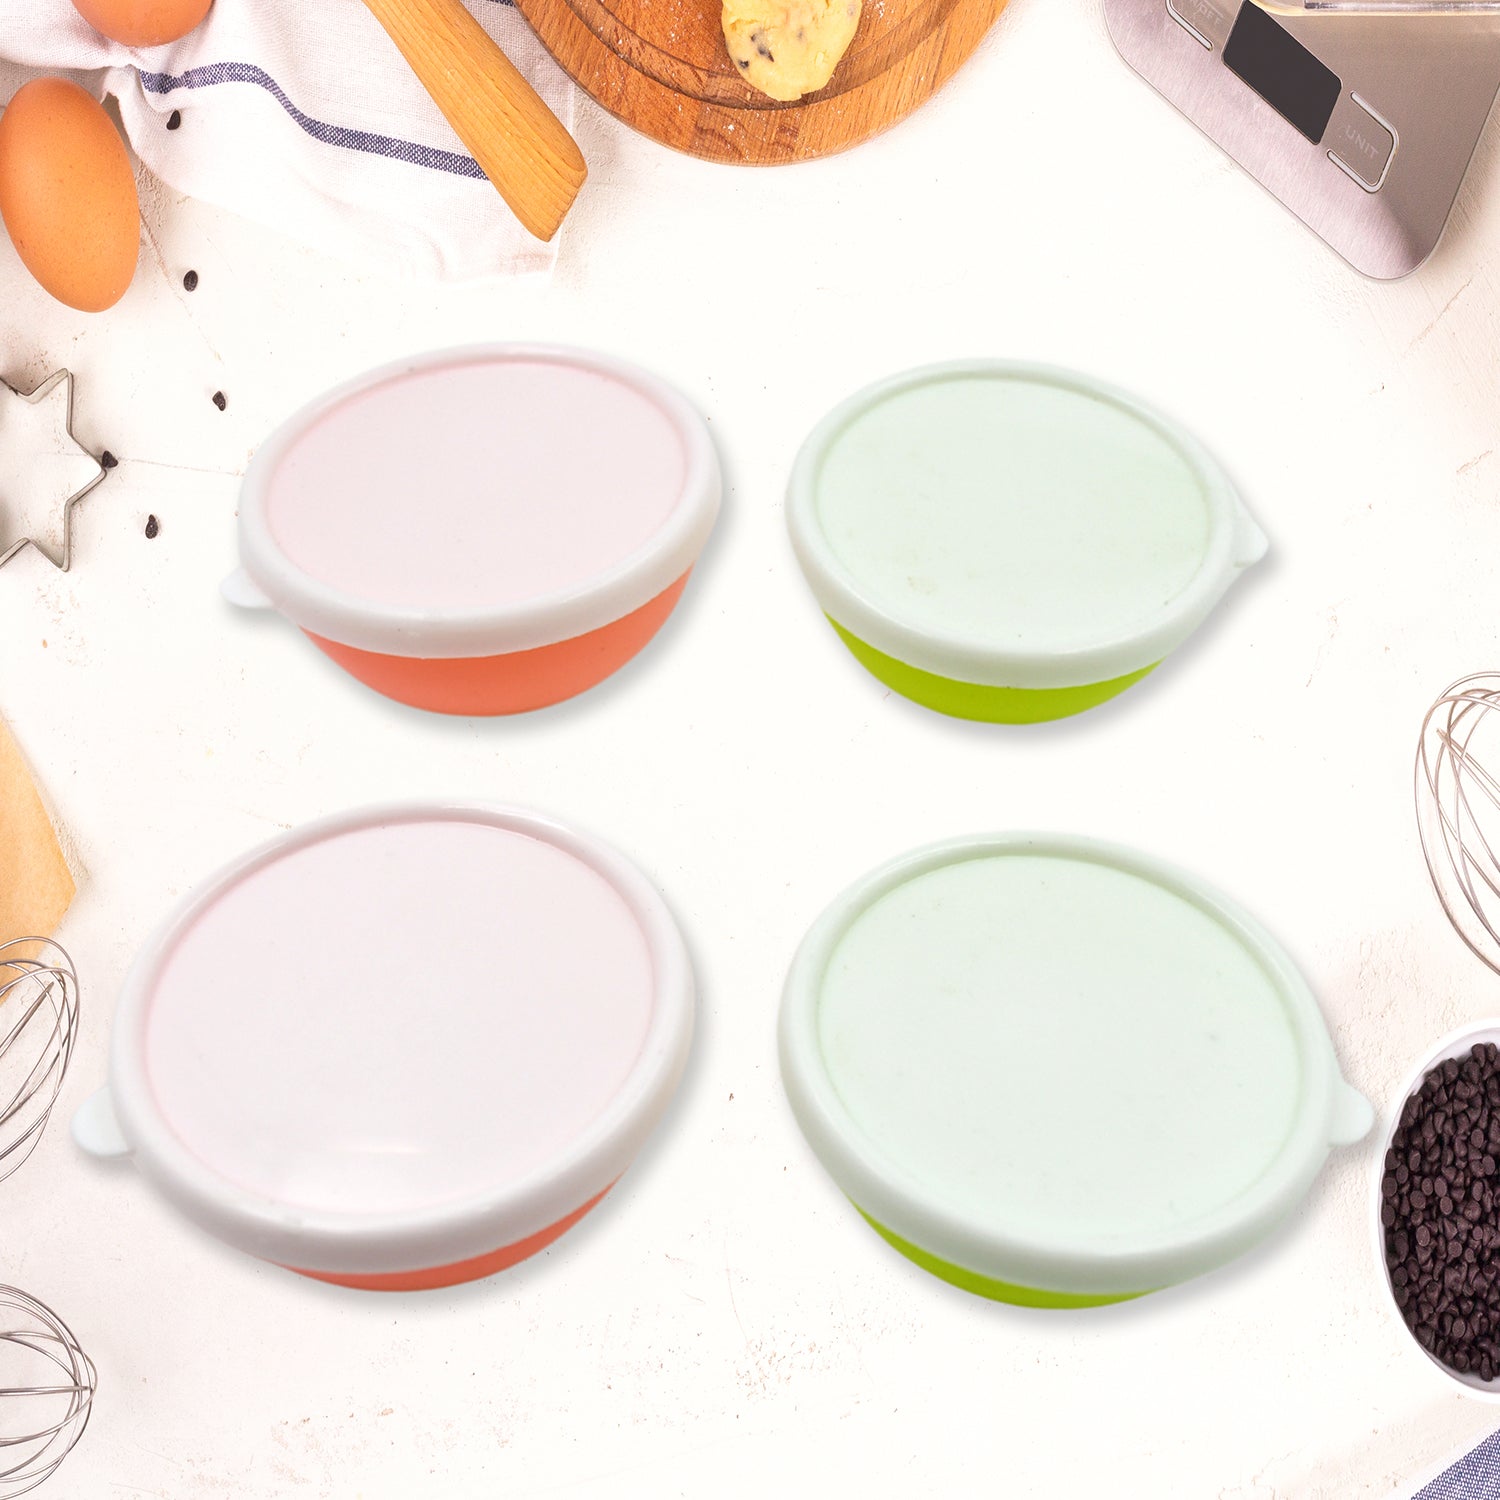 5558 Multipurpose Small Round Plastic Bowl / Katori With Lid, Microwave Safe Reusable Lightweight Bowl, Dishwasher Safe Chutney Bowl (4 Pcs Set)